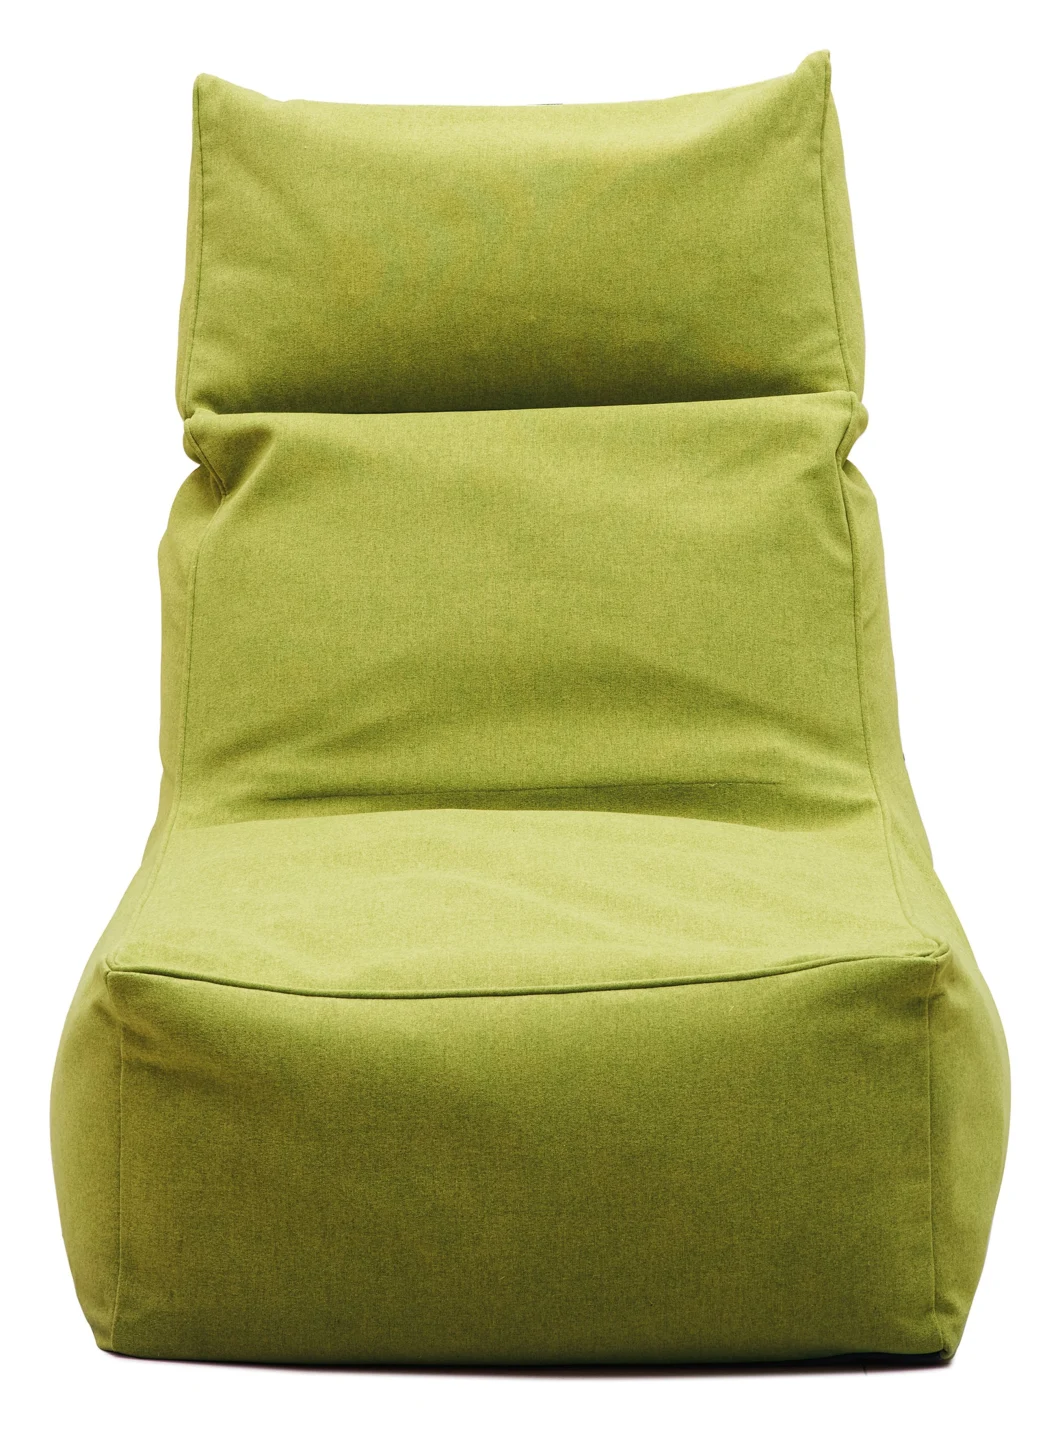 Nice Green Bag Chairs Japanese Style Floor Lazy Sofa